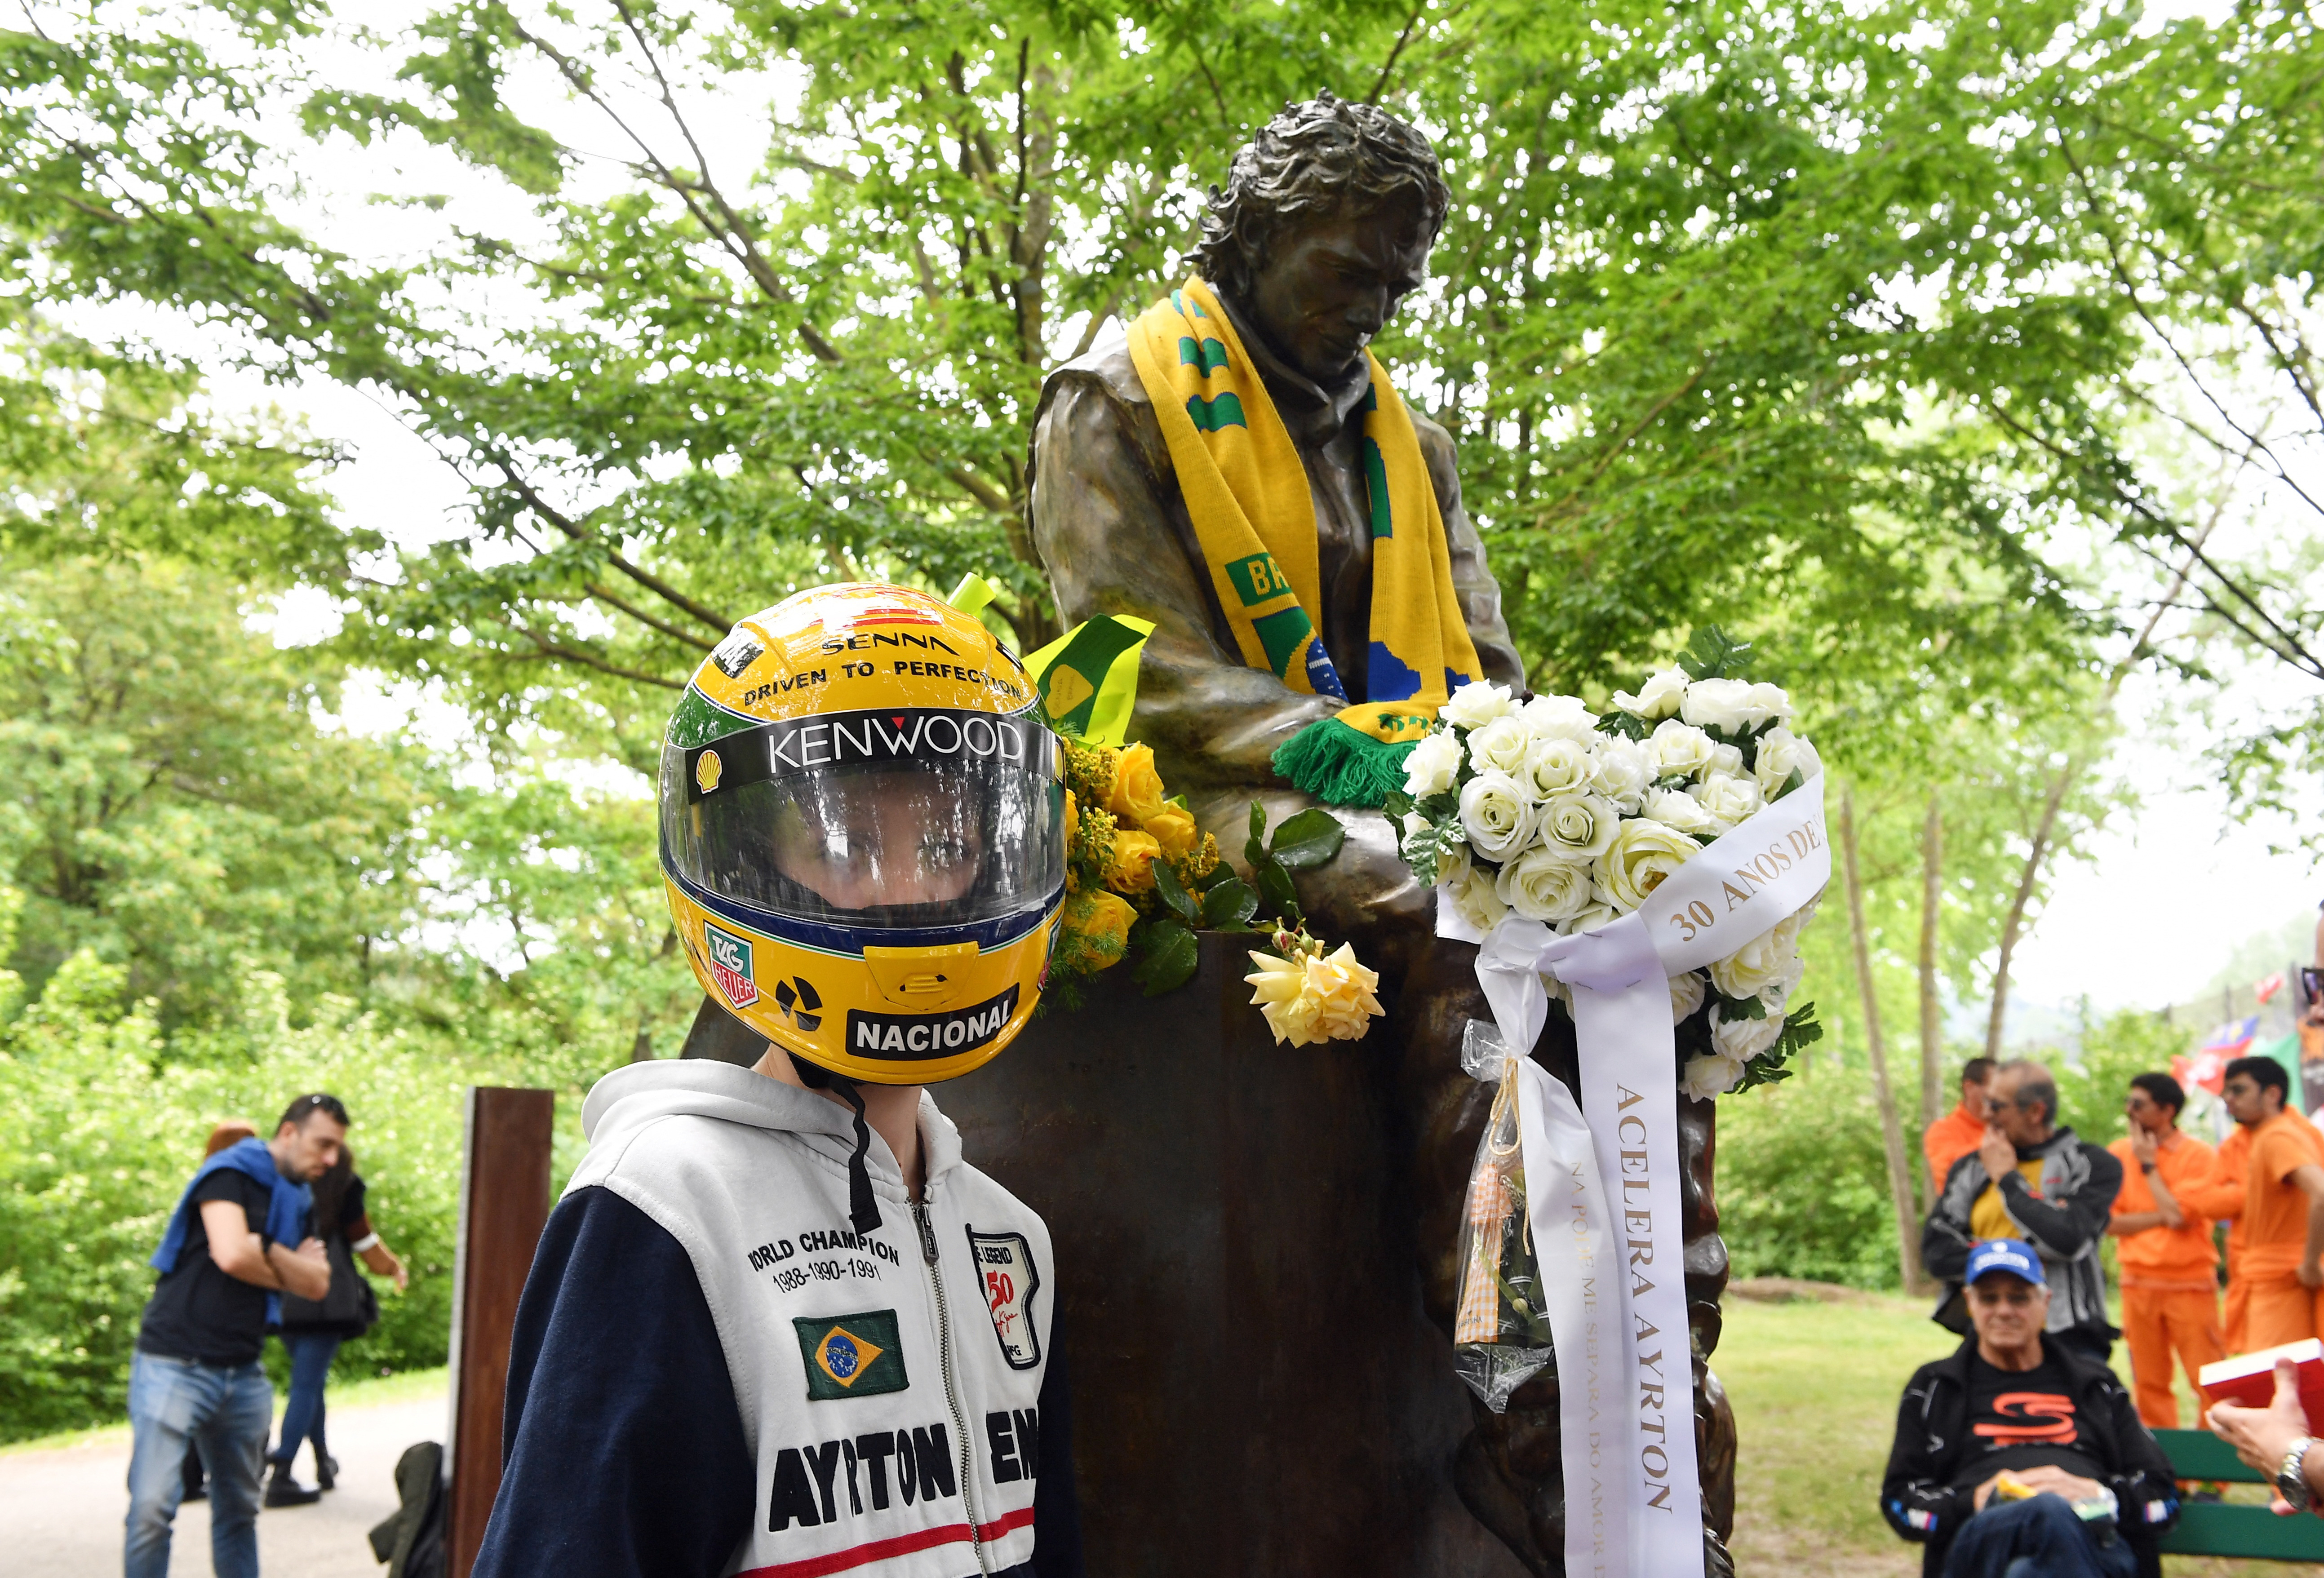 30th Anniversary of Ayrton Senna's death